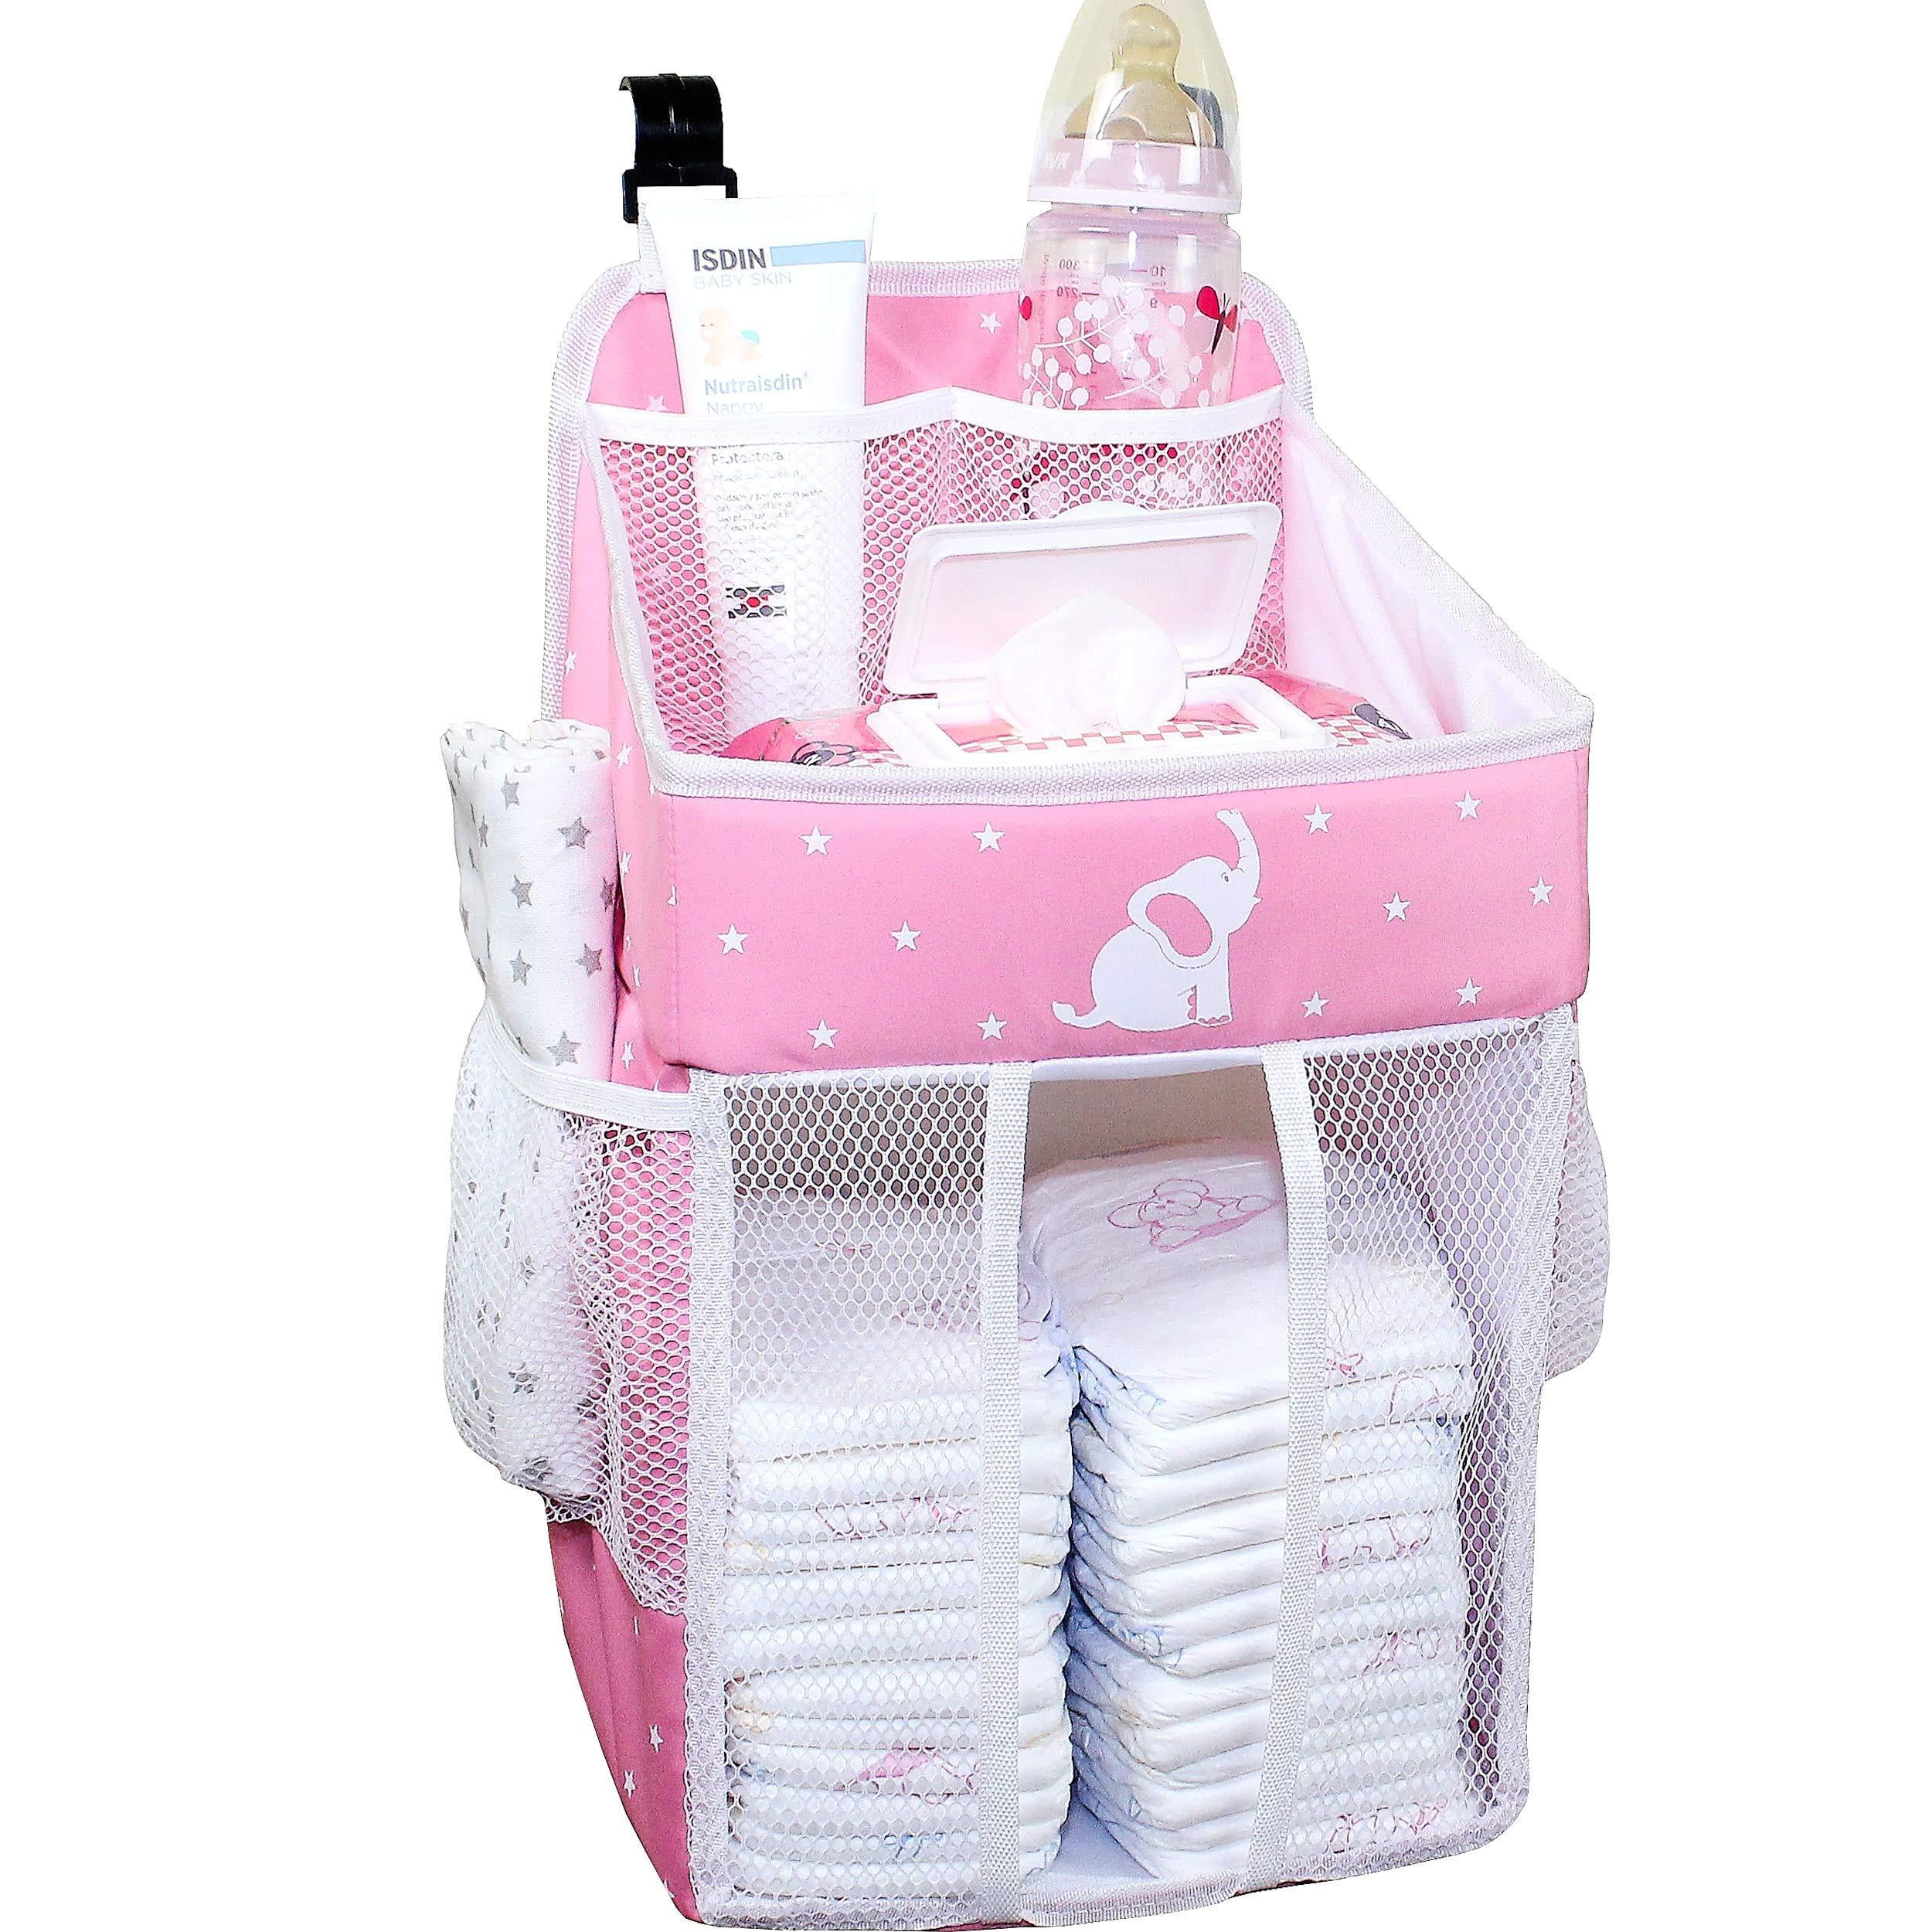 Playard o Wall & Nursery Organizer Baby Shower Gifts for Newborn Hanging Diaper Caddy Organizer Crib Diaper Stacker per Table 